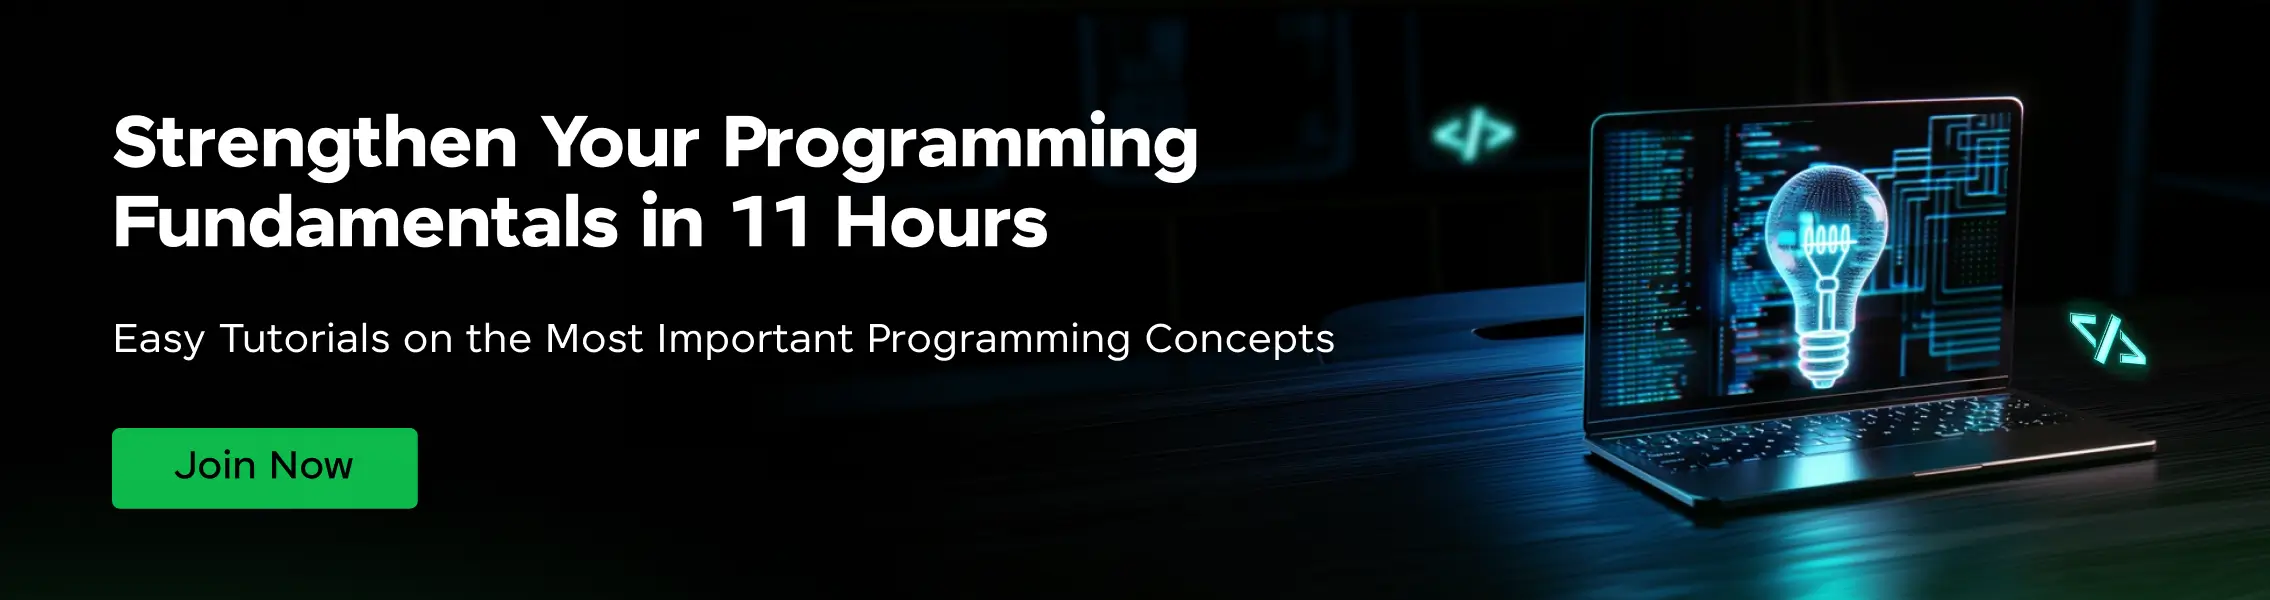 programming fundamentals course desktop banner horizontal